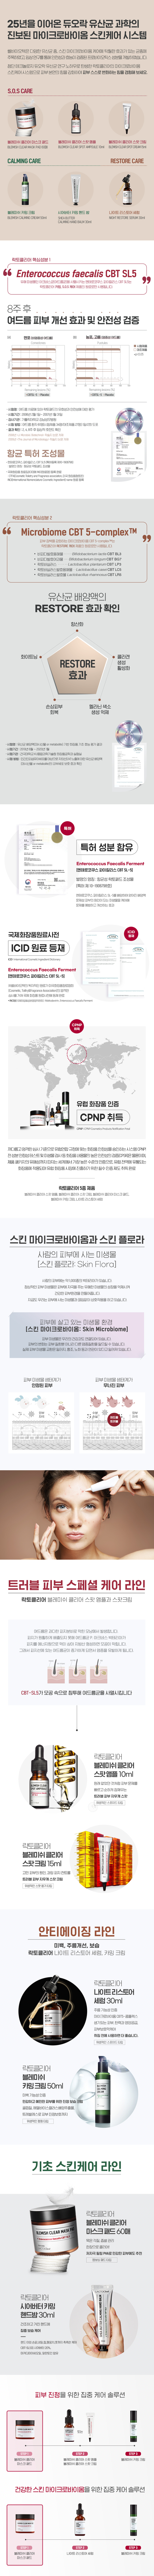 Skin Microbiome